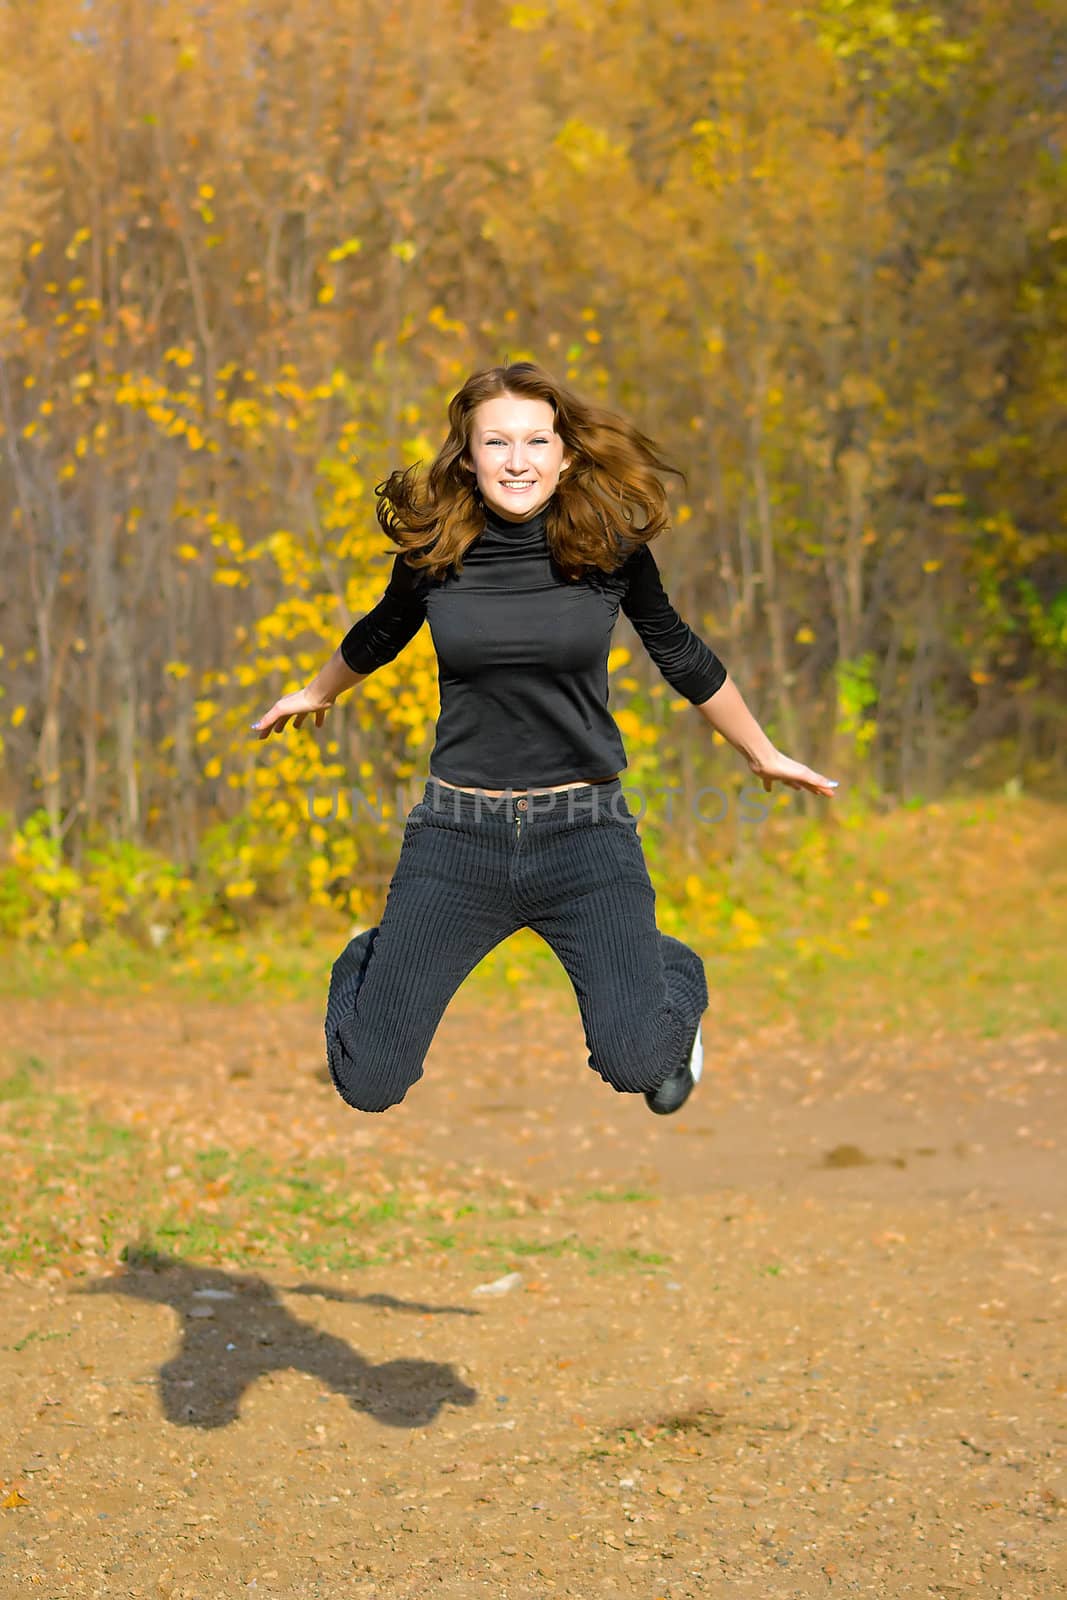 jumping girl by vikiri